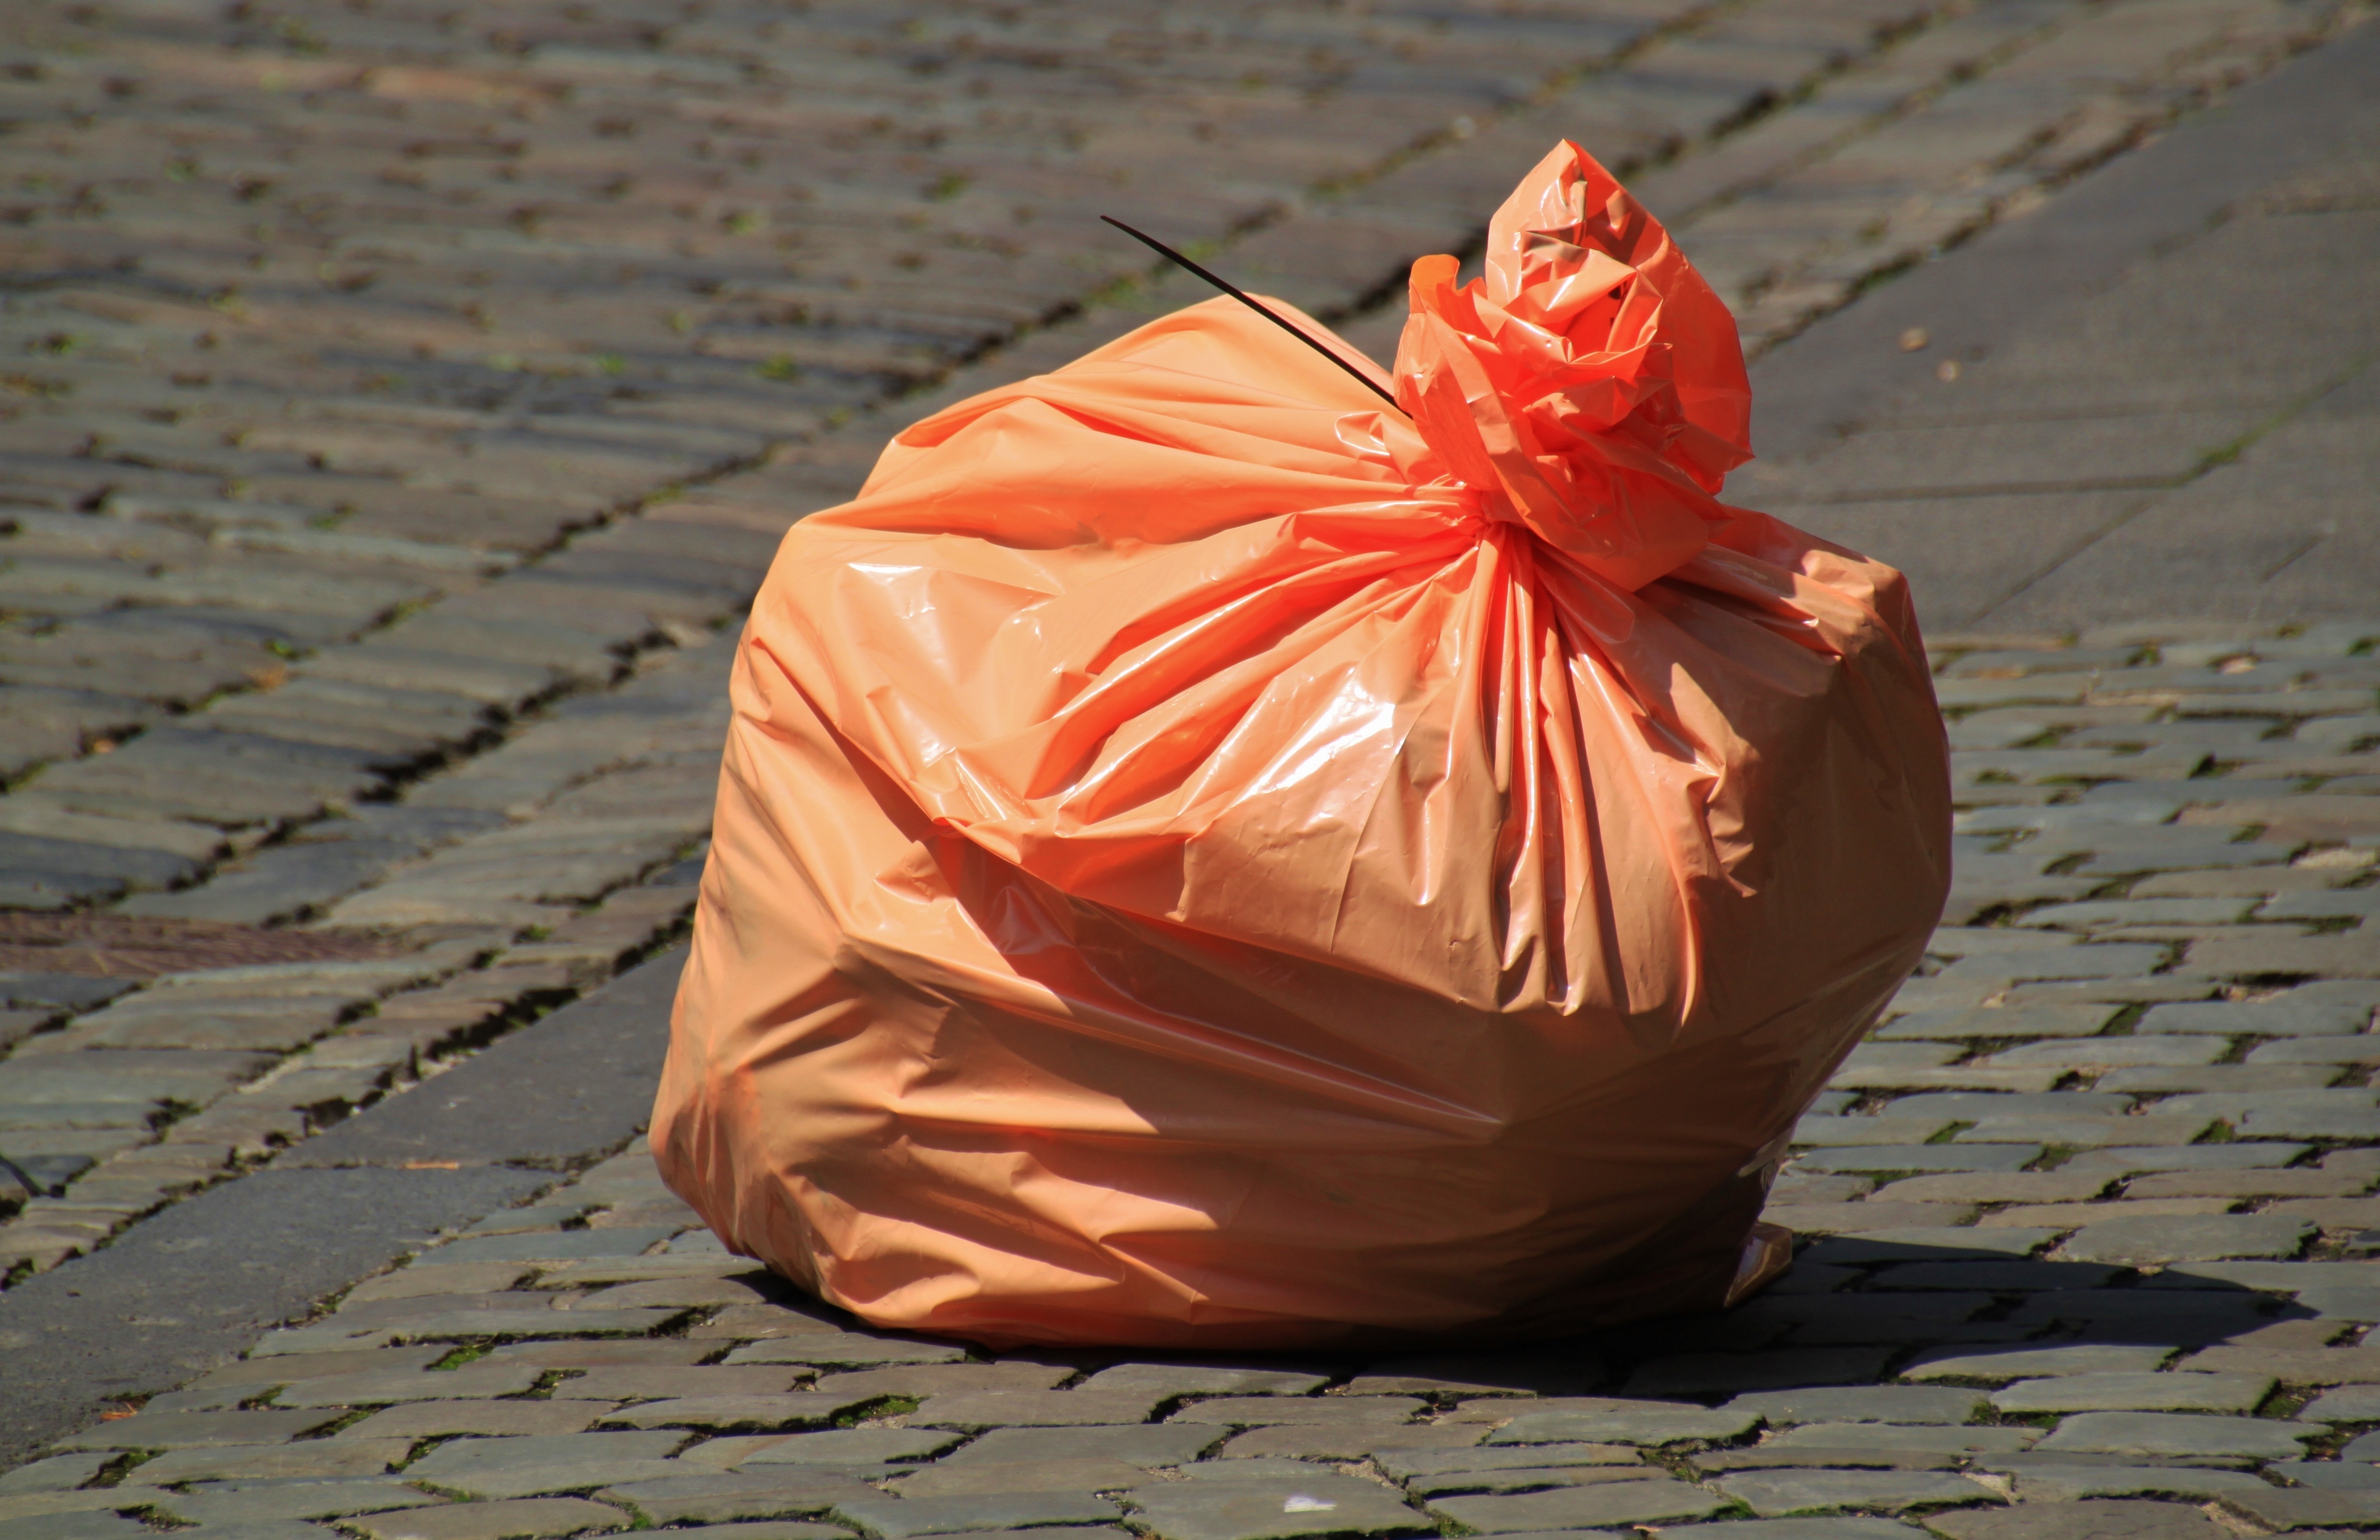 В ХМАО три девушки сами очистили набережную от мусора